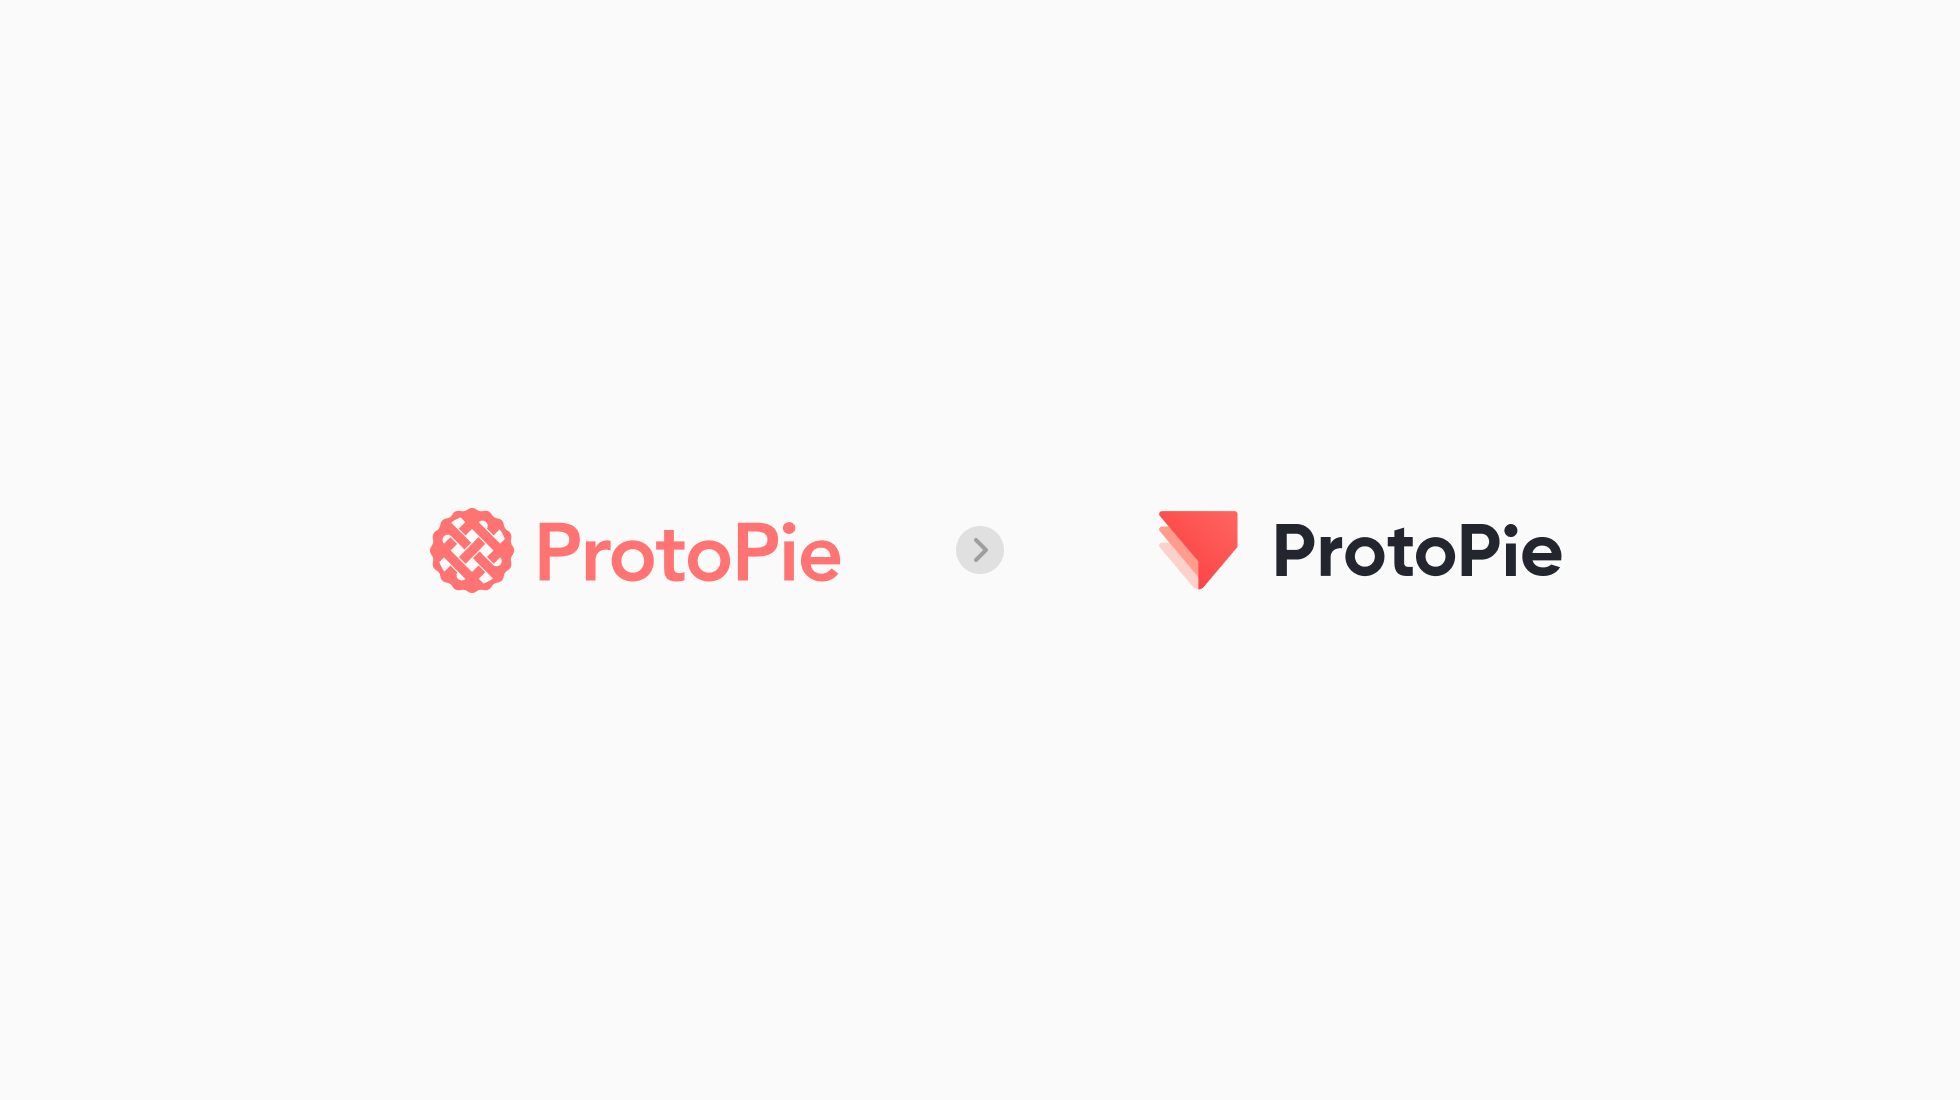 protopie for ux design download